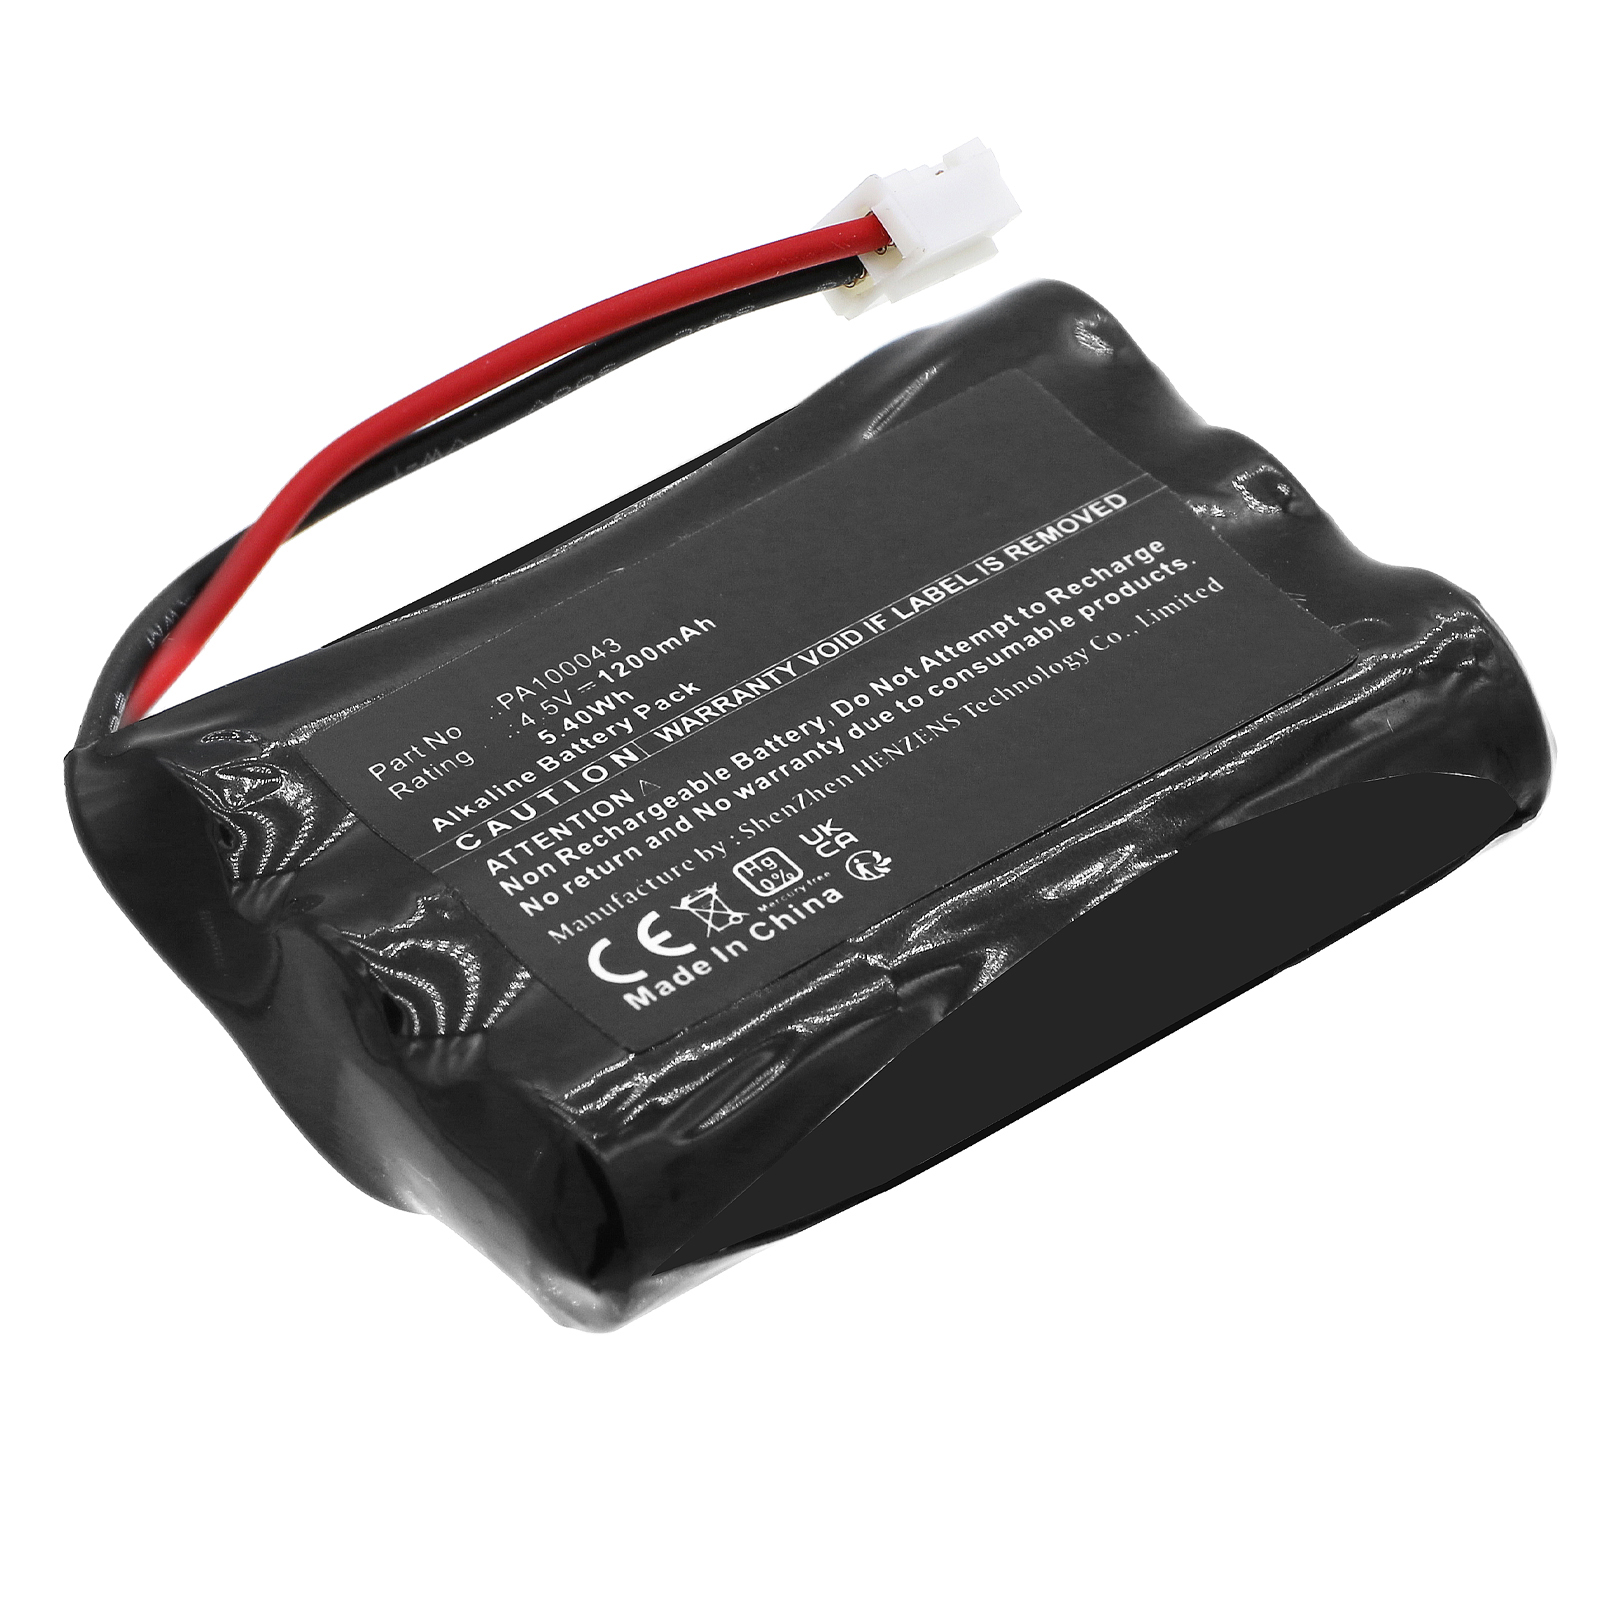 Batteries for Safe-O-TronicDoor Lock